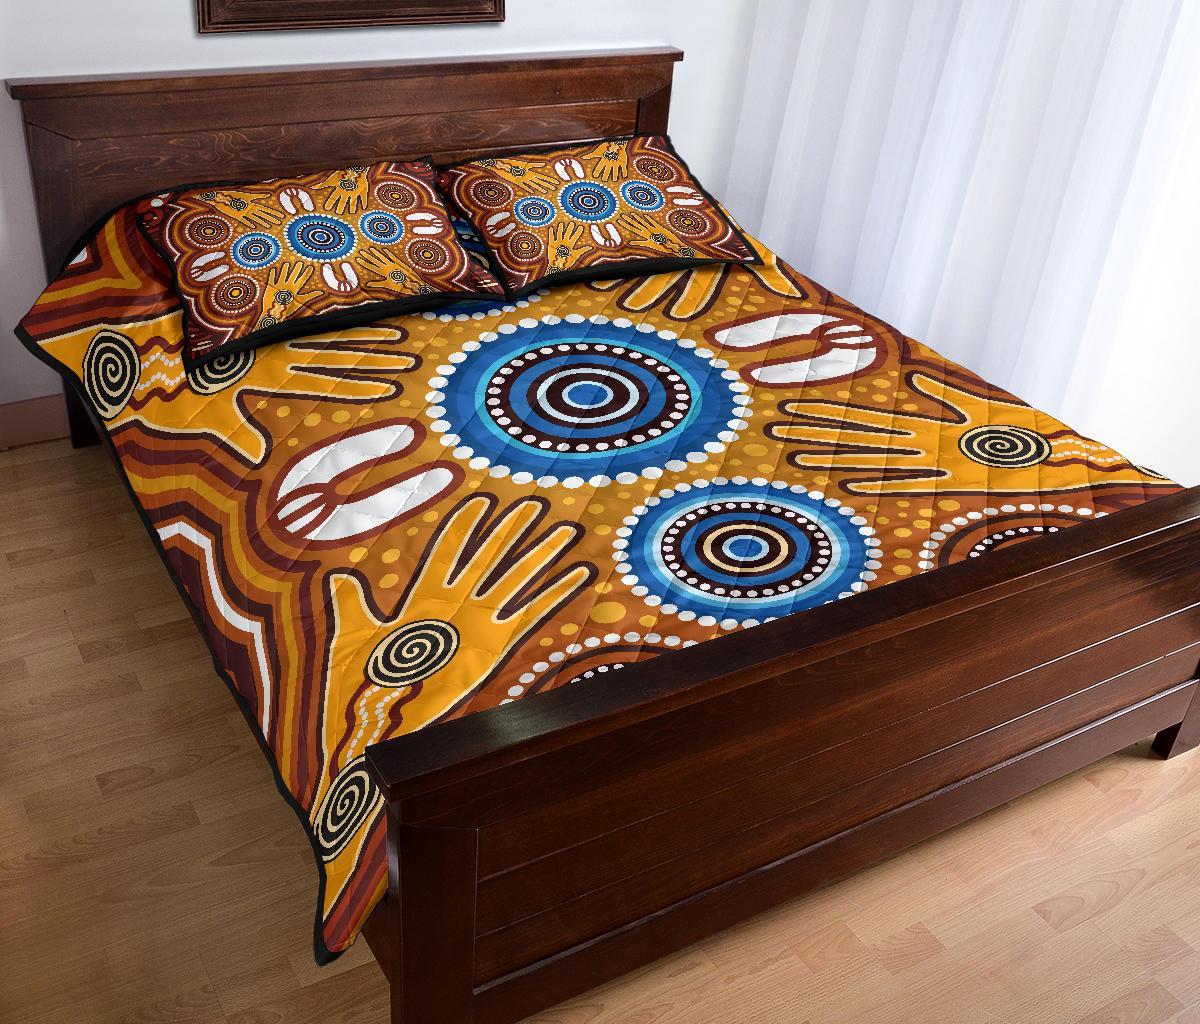 aboriginal-quilt-bed-set-indegenous-dot-painting-art